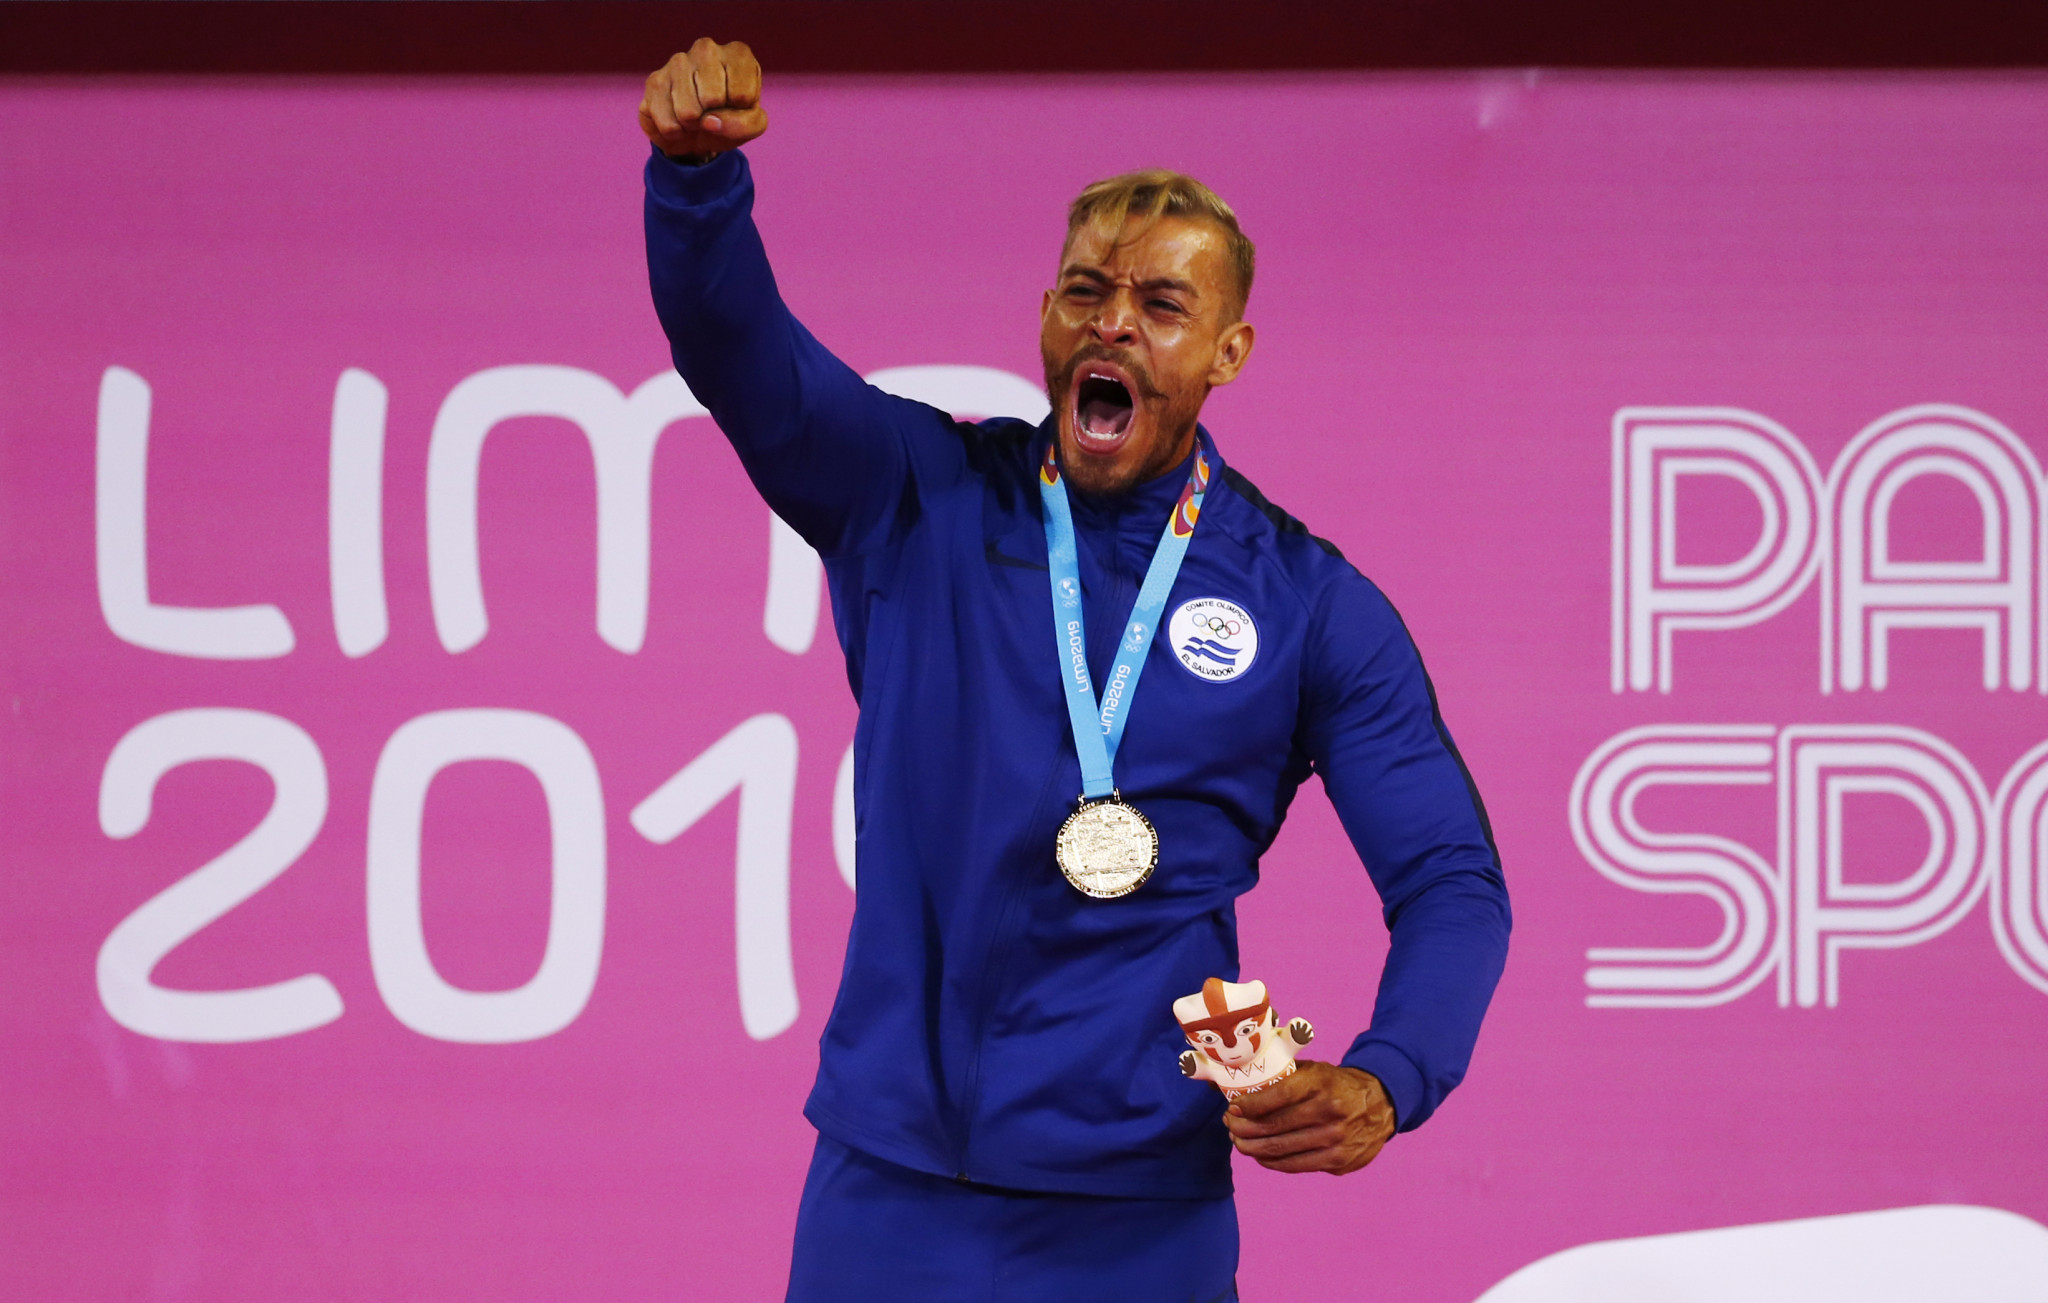 El Salvador won both golds ©Lima 2019